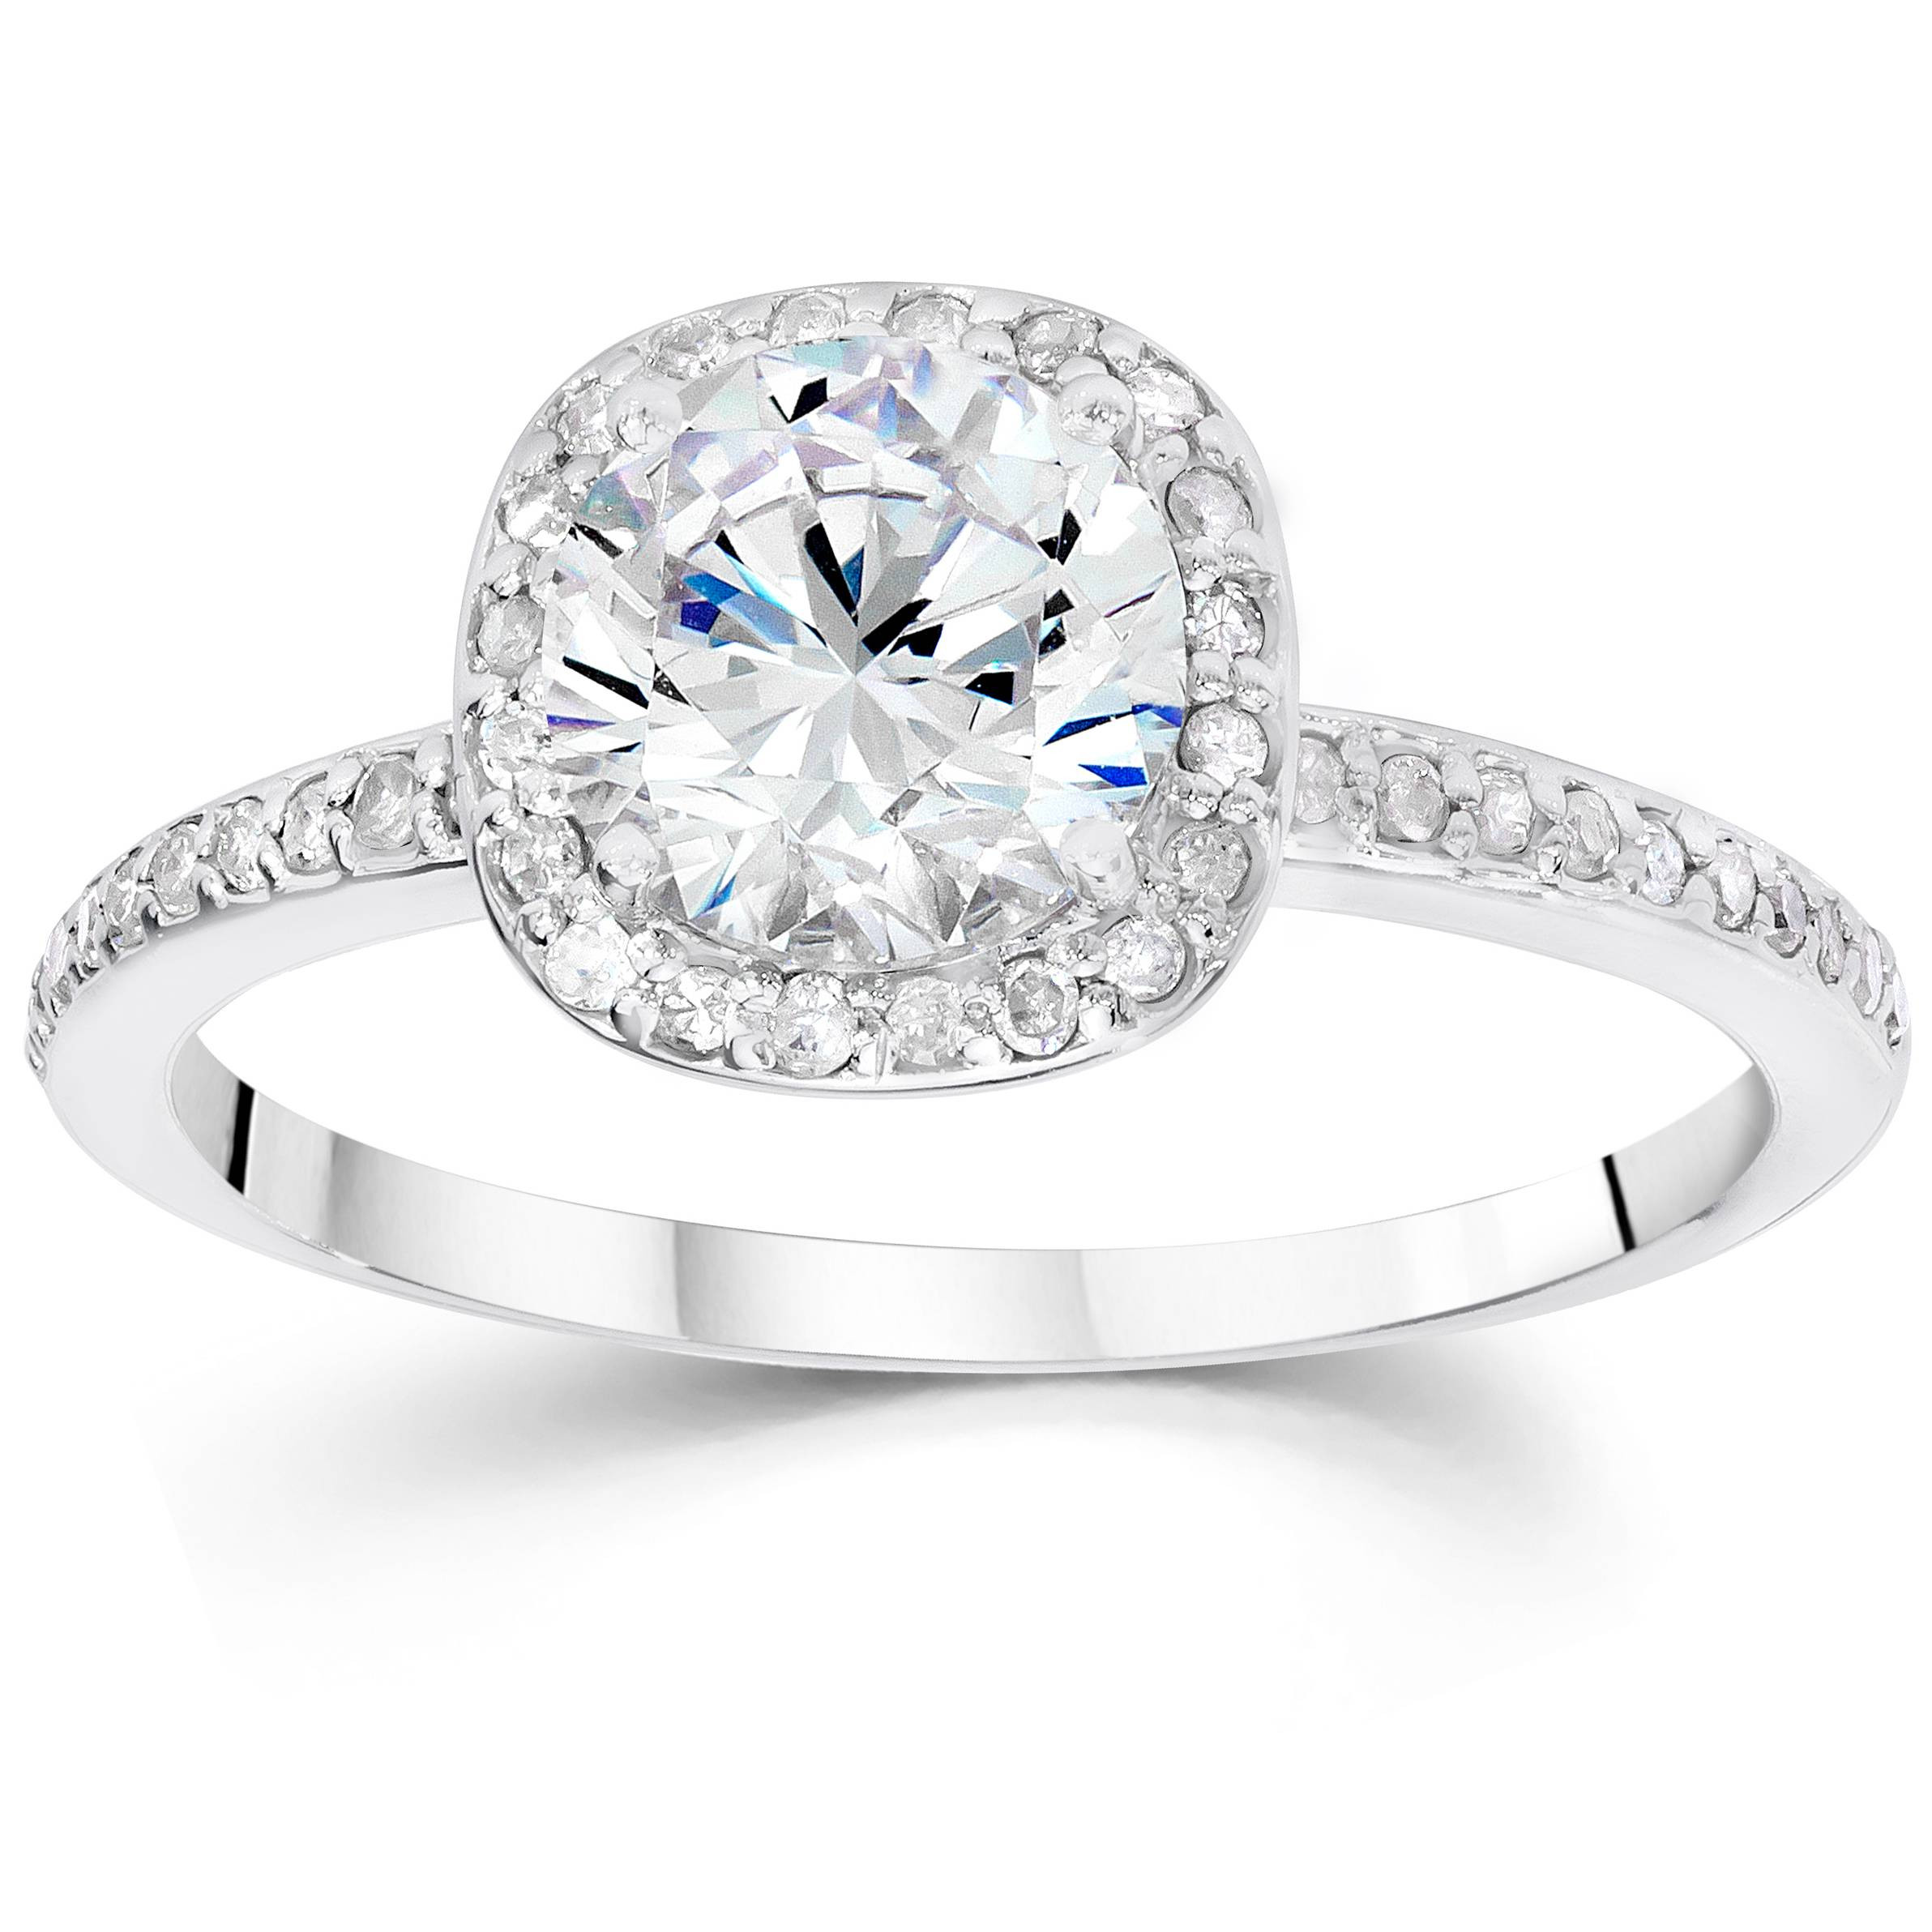 Halo Diamond Engagement Rings
 5 8ct Cushion Halo Diamond Engagement Ring 14K White Gold